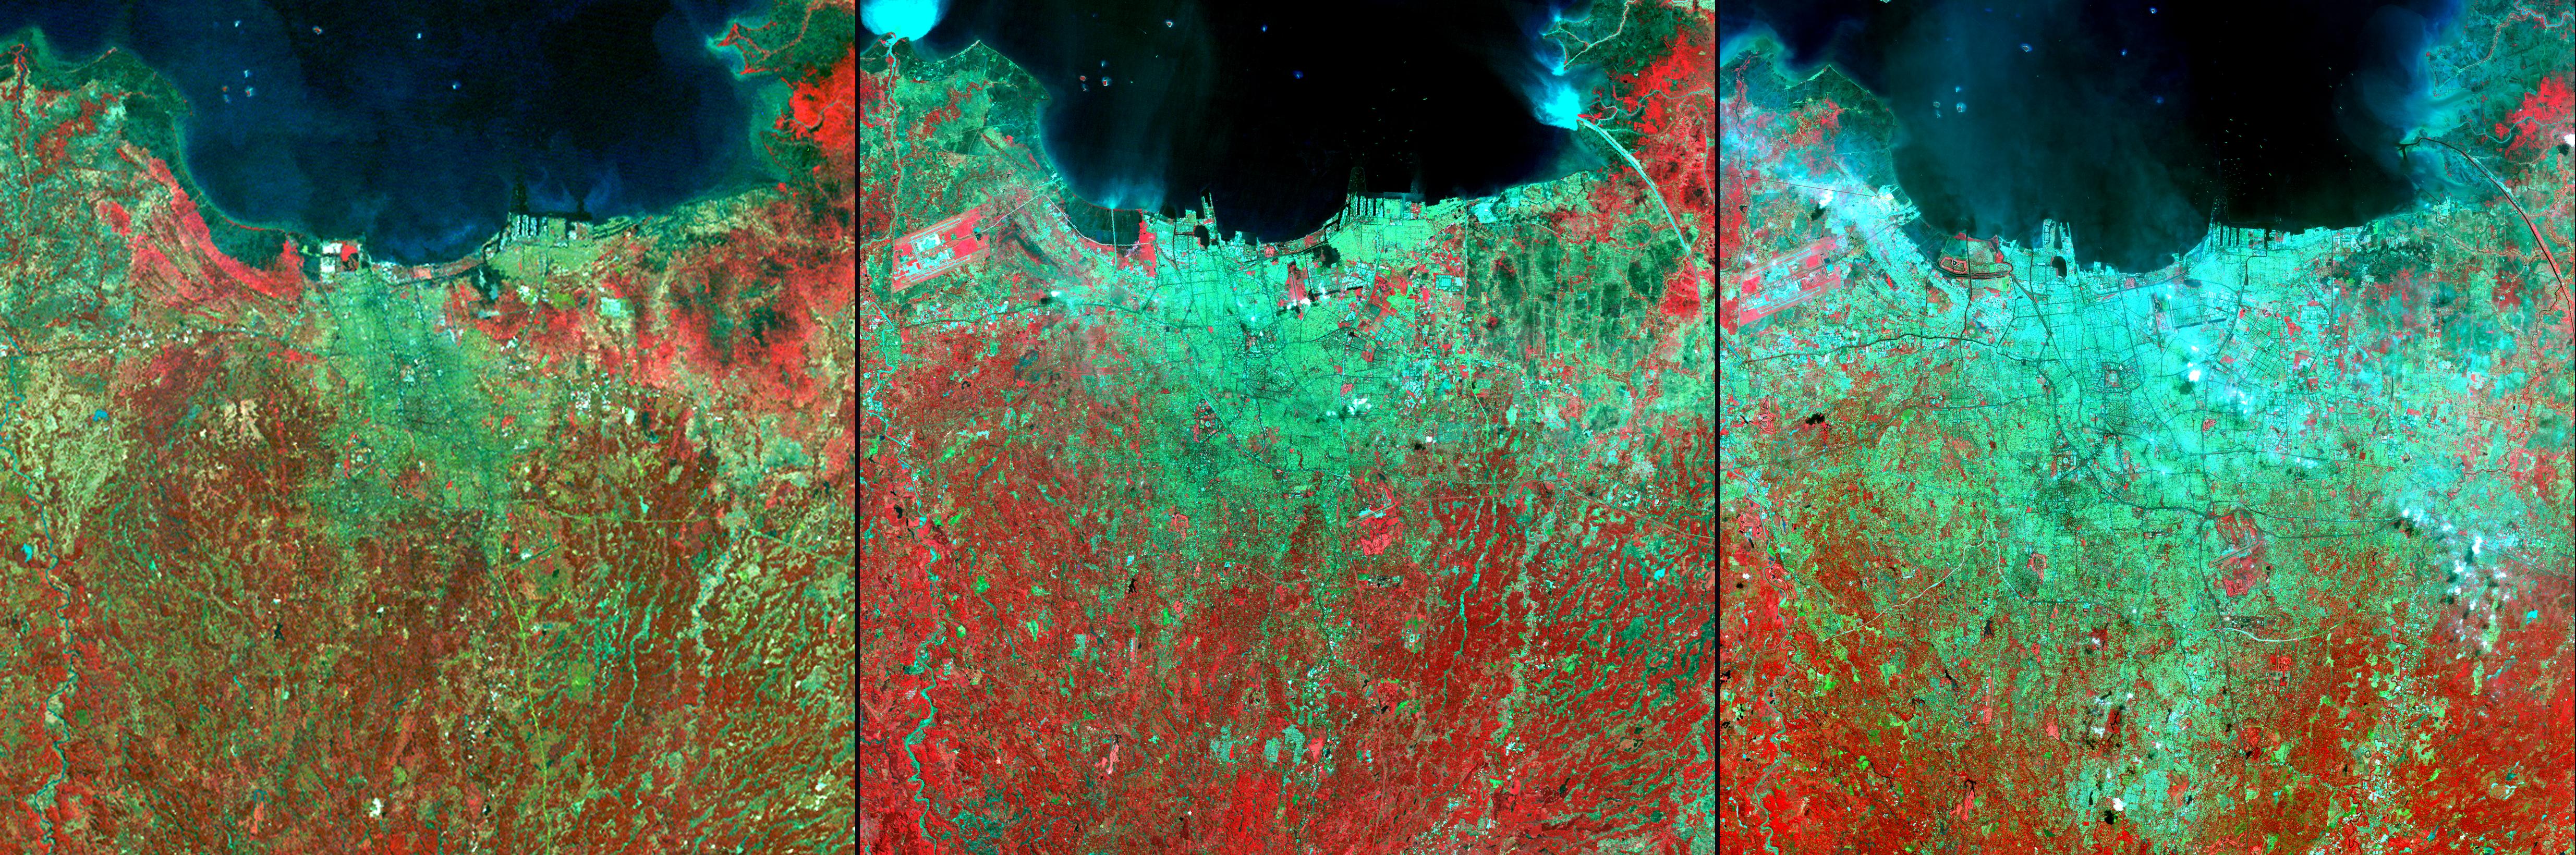 Поменяться участками. Фото человека со спутника. Фото со спутника 2004 года. Кадры со спутника людей. Последнее фото на земле.